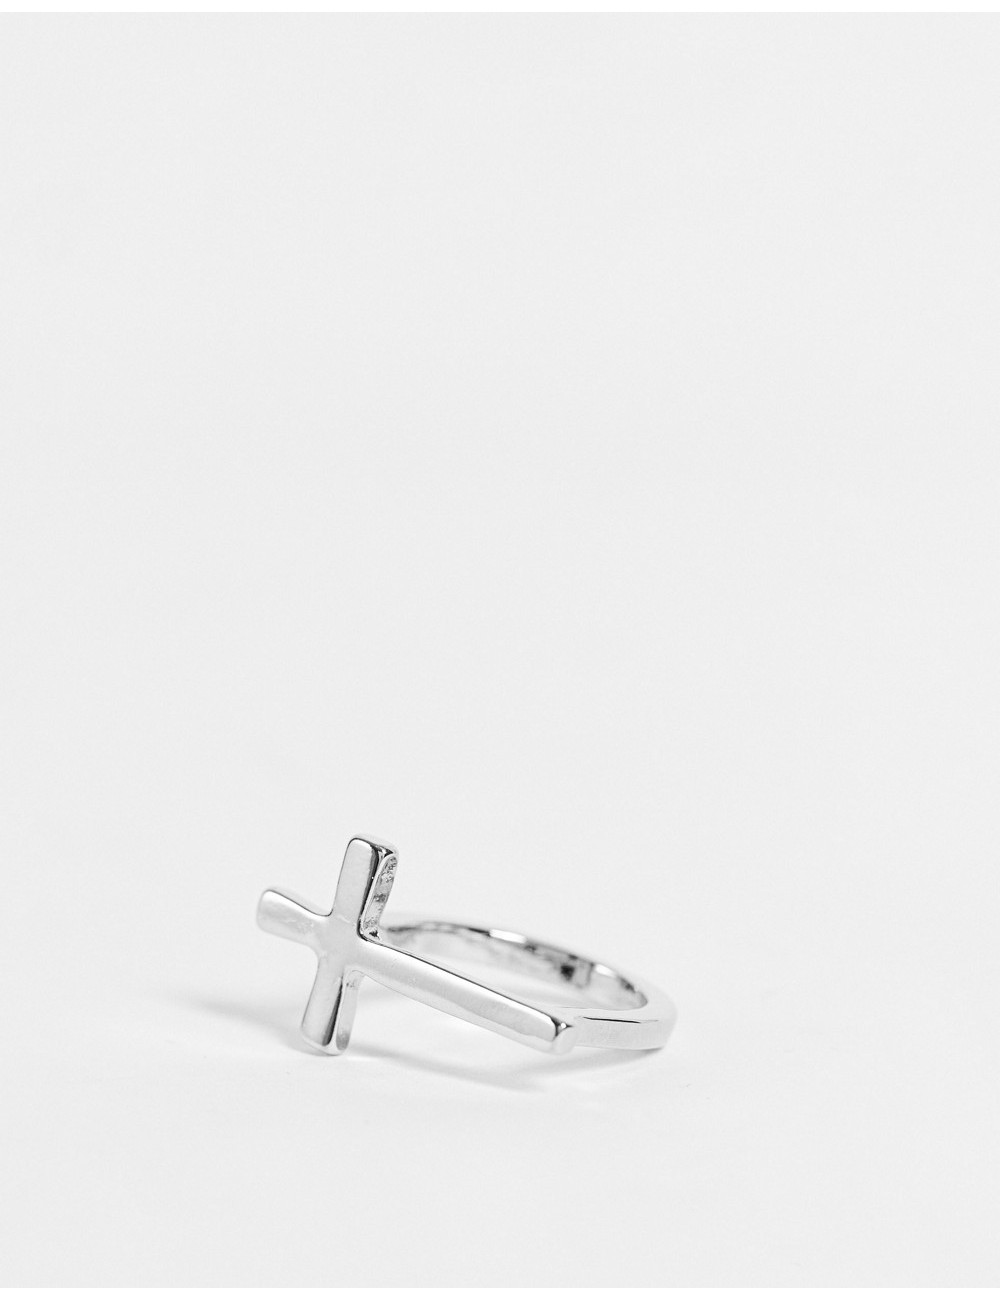 DesignB cross ring in silver